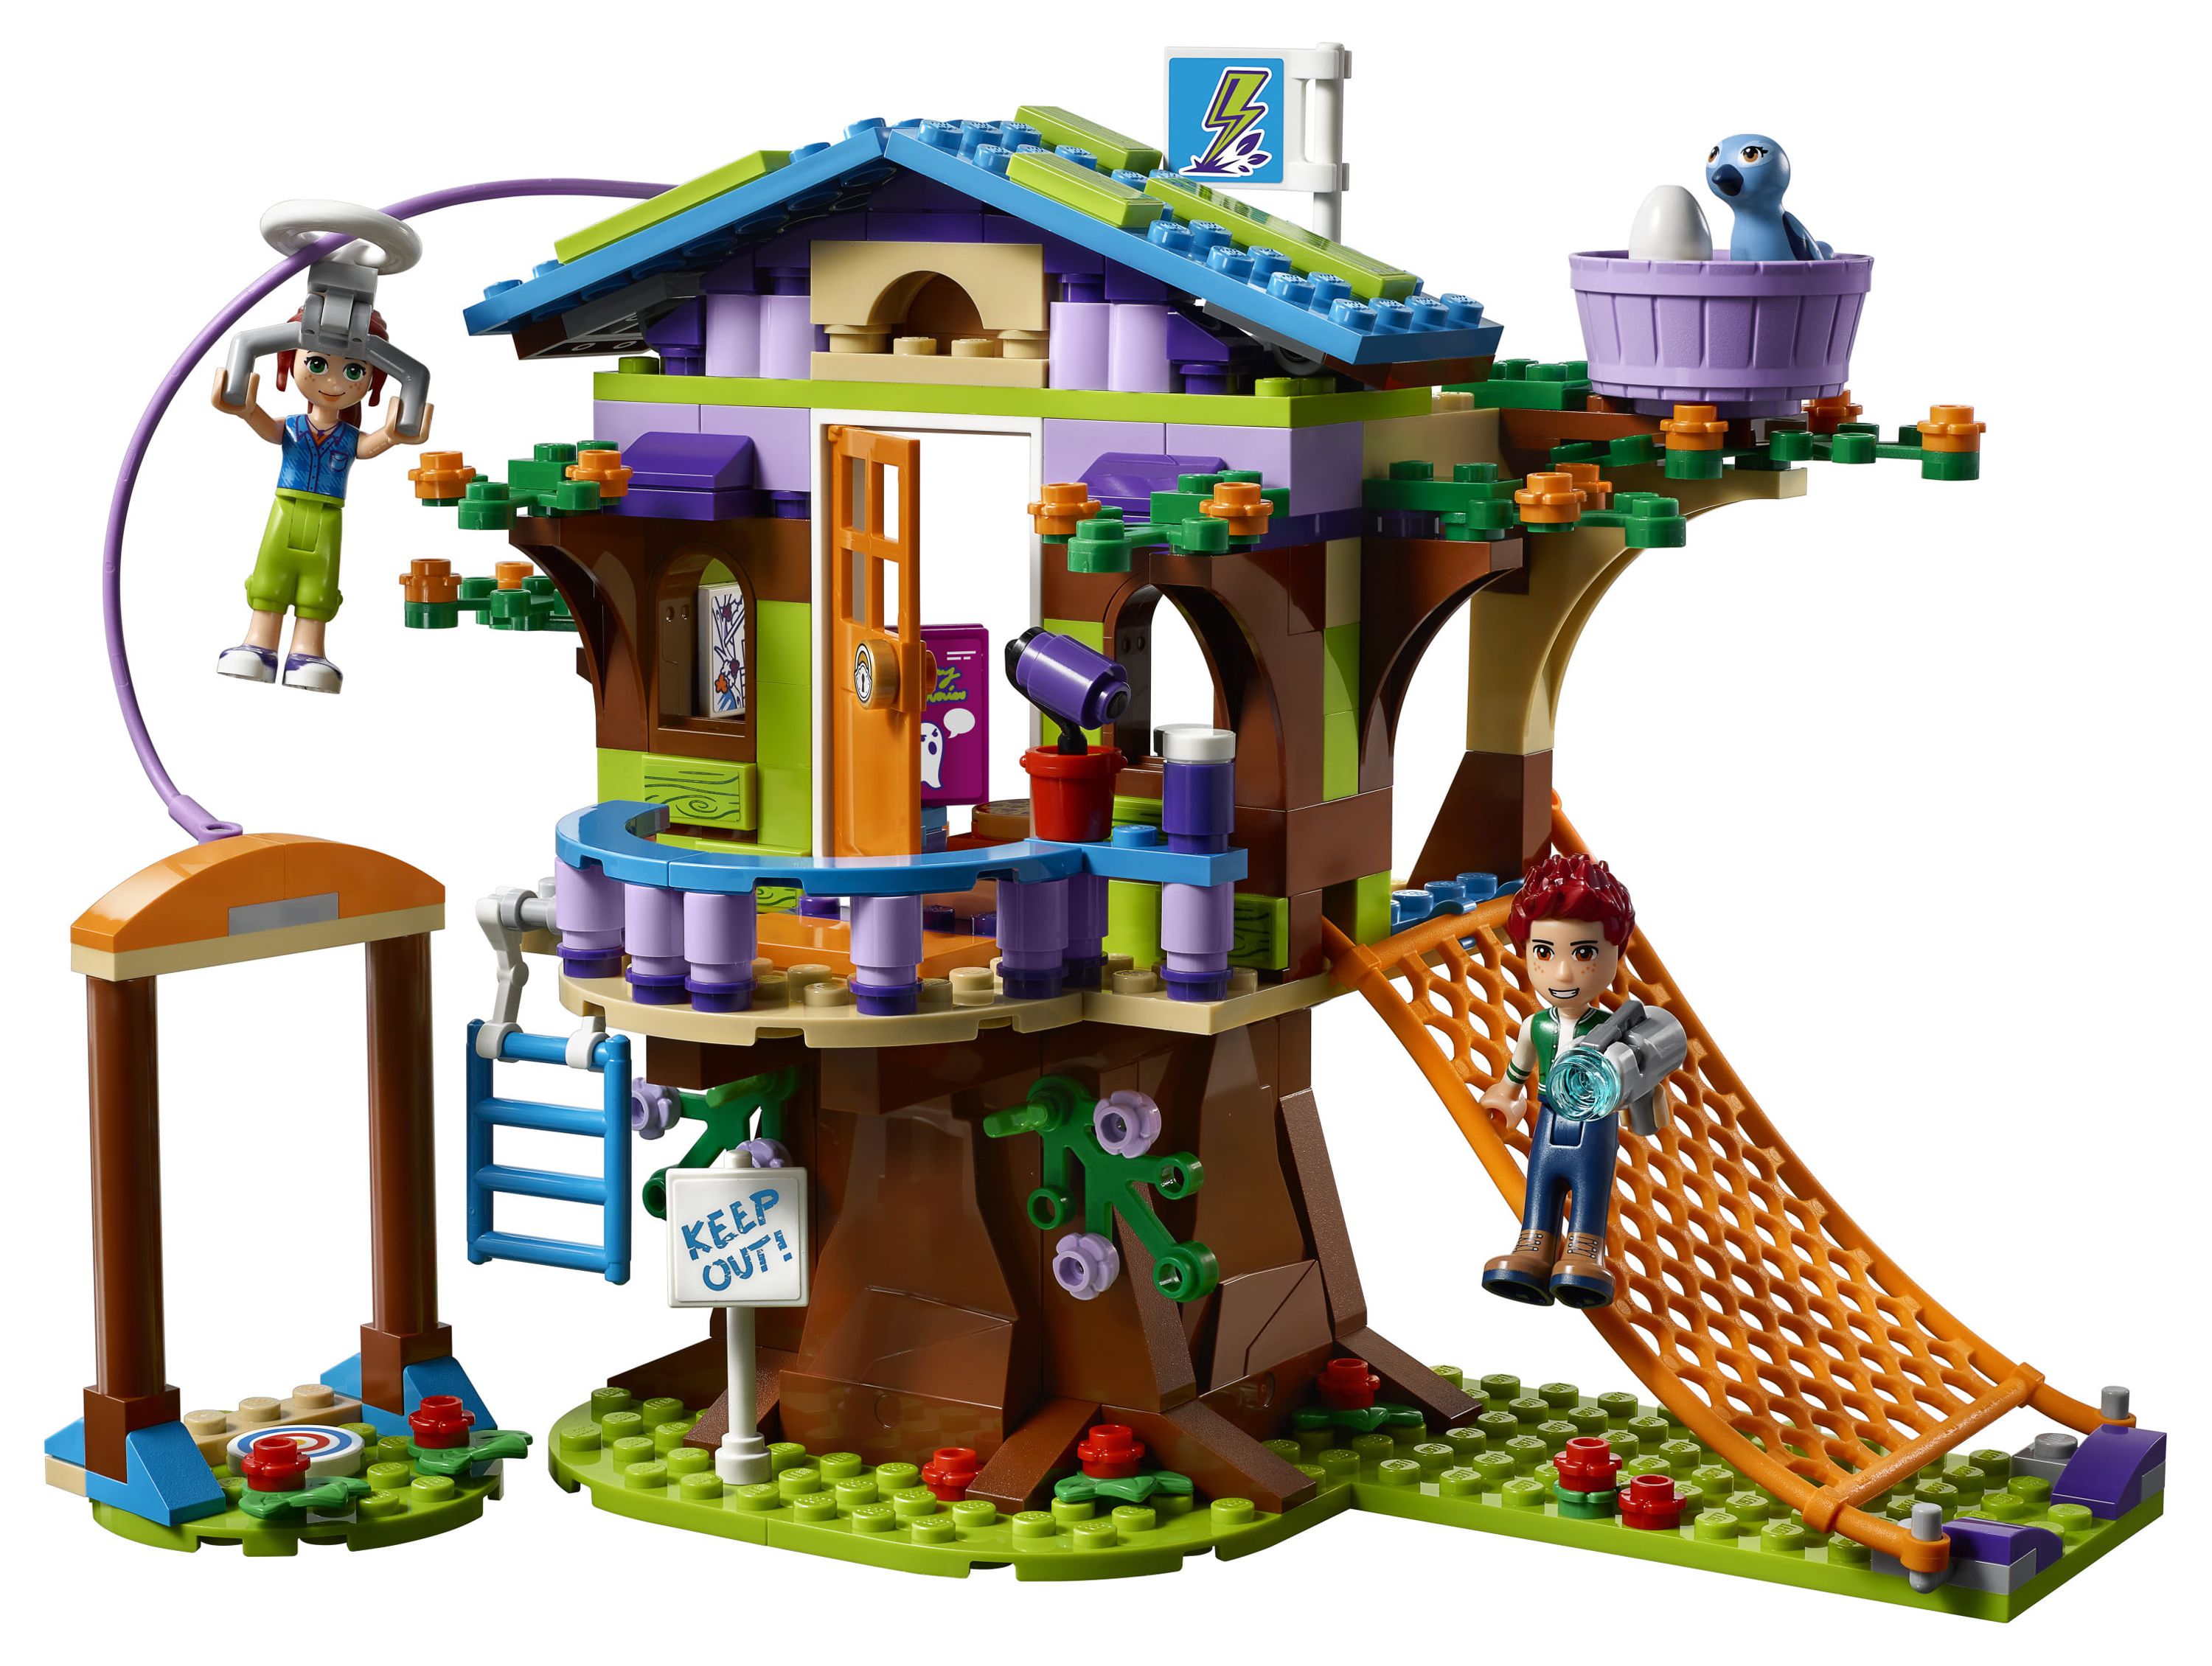 LEGO Friends Mia's Tree House 41335 - image 3 of 5